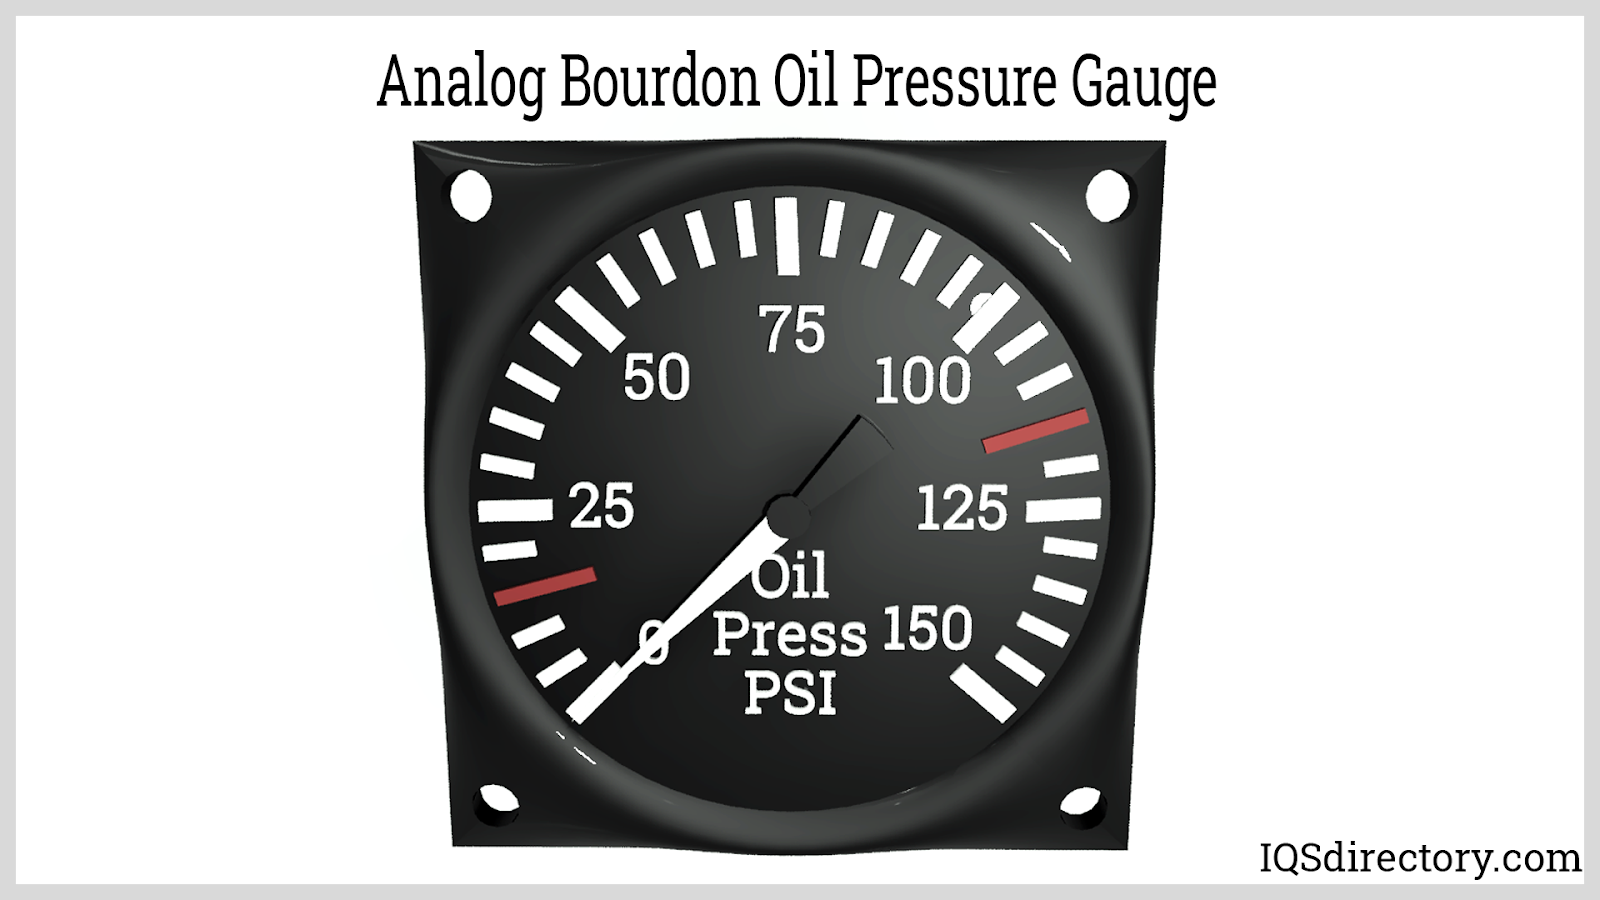 Analog Bourdon Oil Pressure Gauge